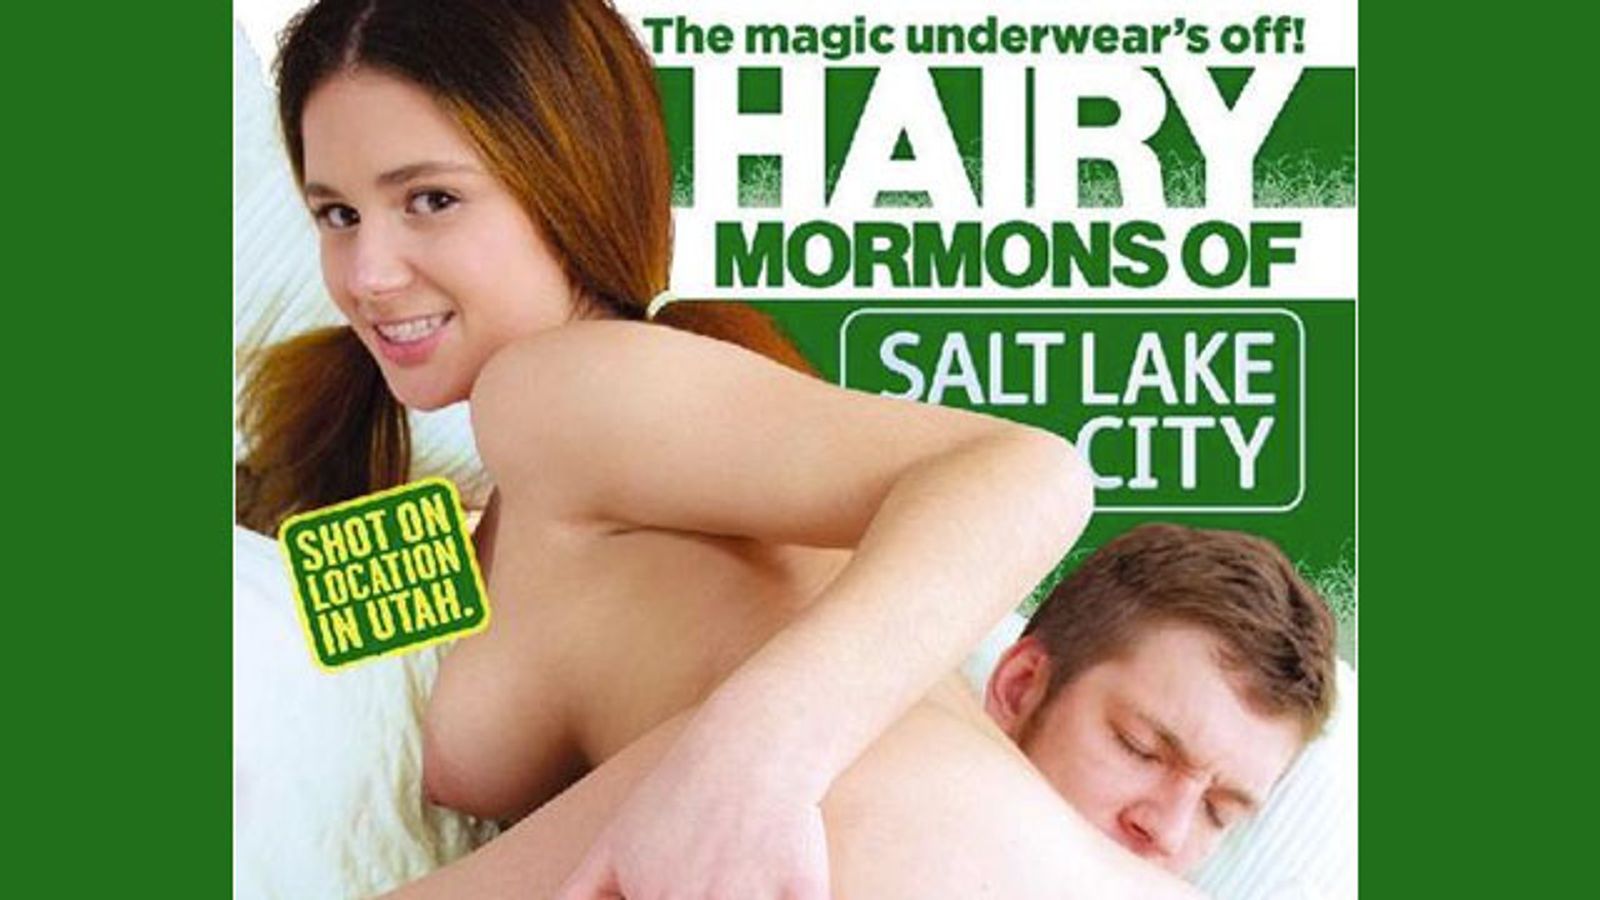 Hot Mess Peddles 'Hairy Mormons of Salt Lake City'